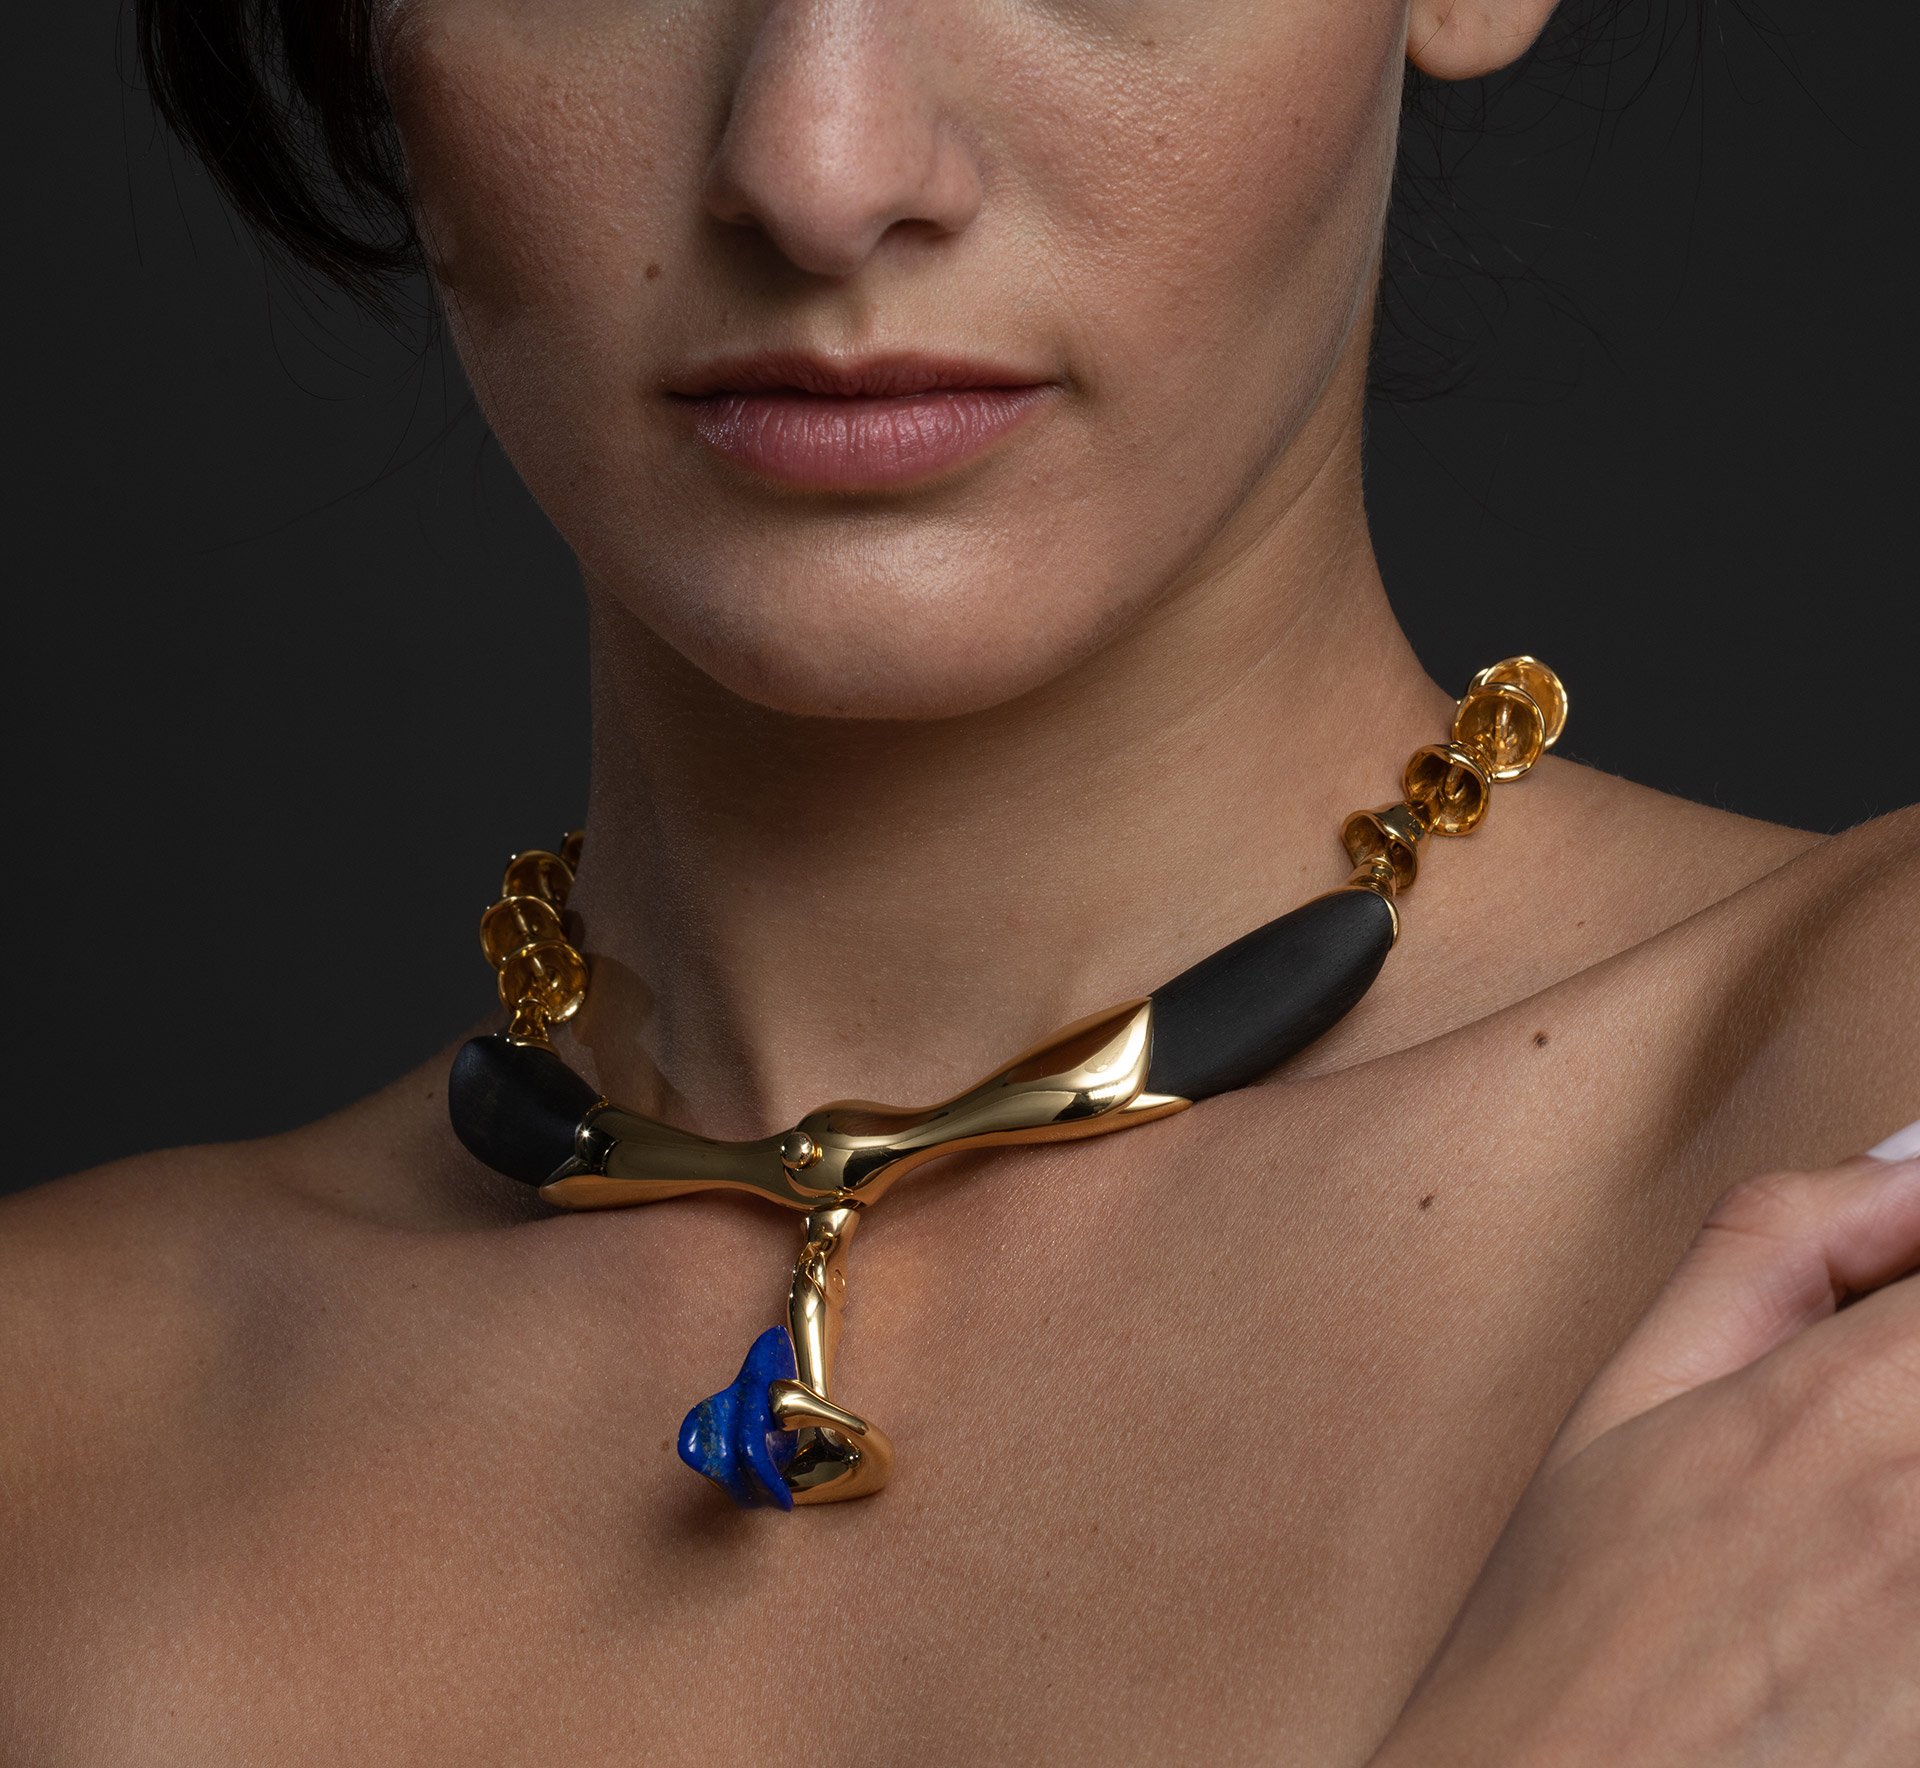 egypt-necklaces-collection-julio-martinez-barnetche-marion-friedmann-gallery-LR-egypt45-cut.jpg